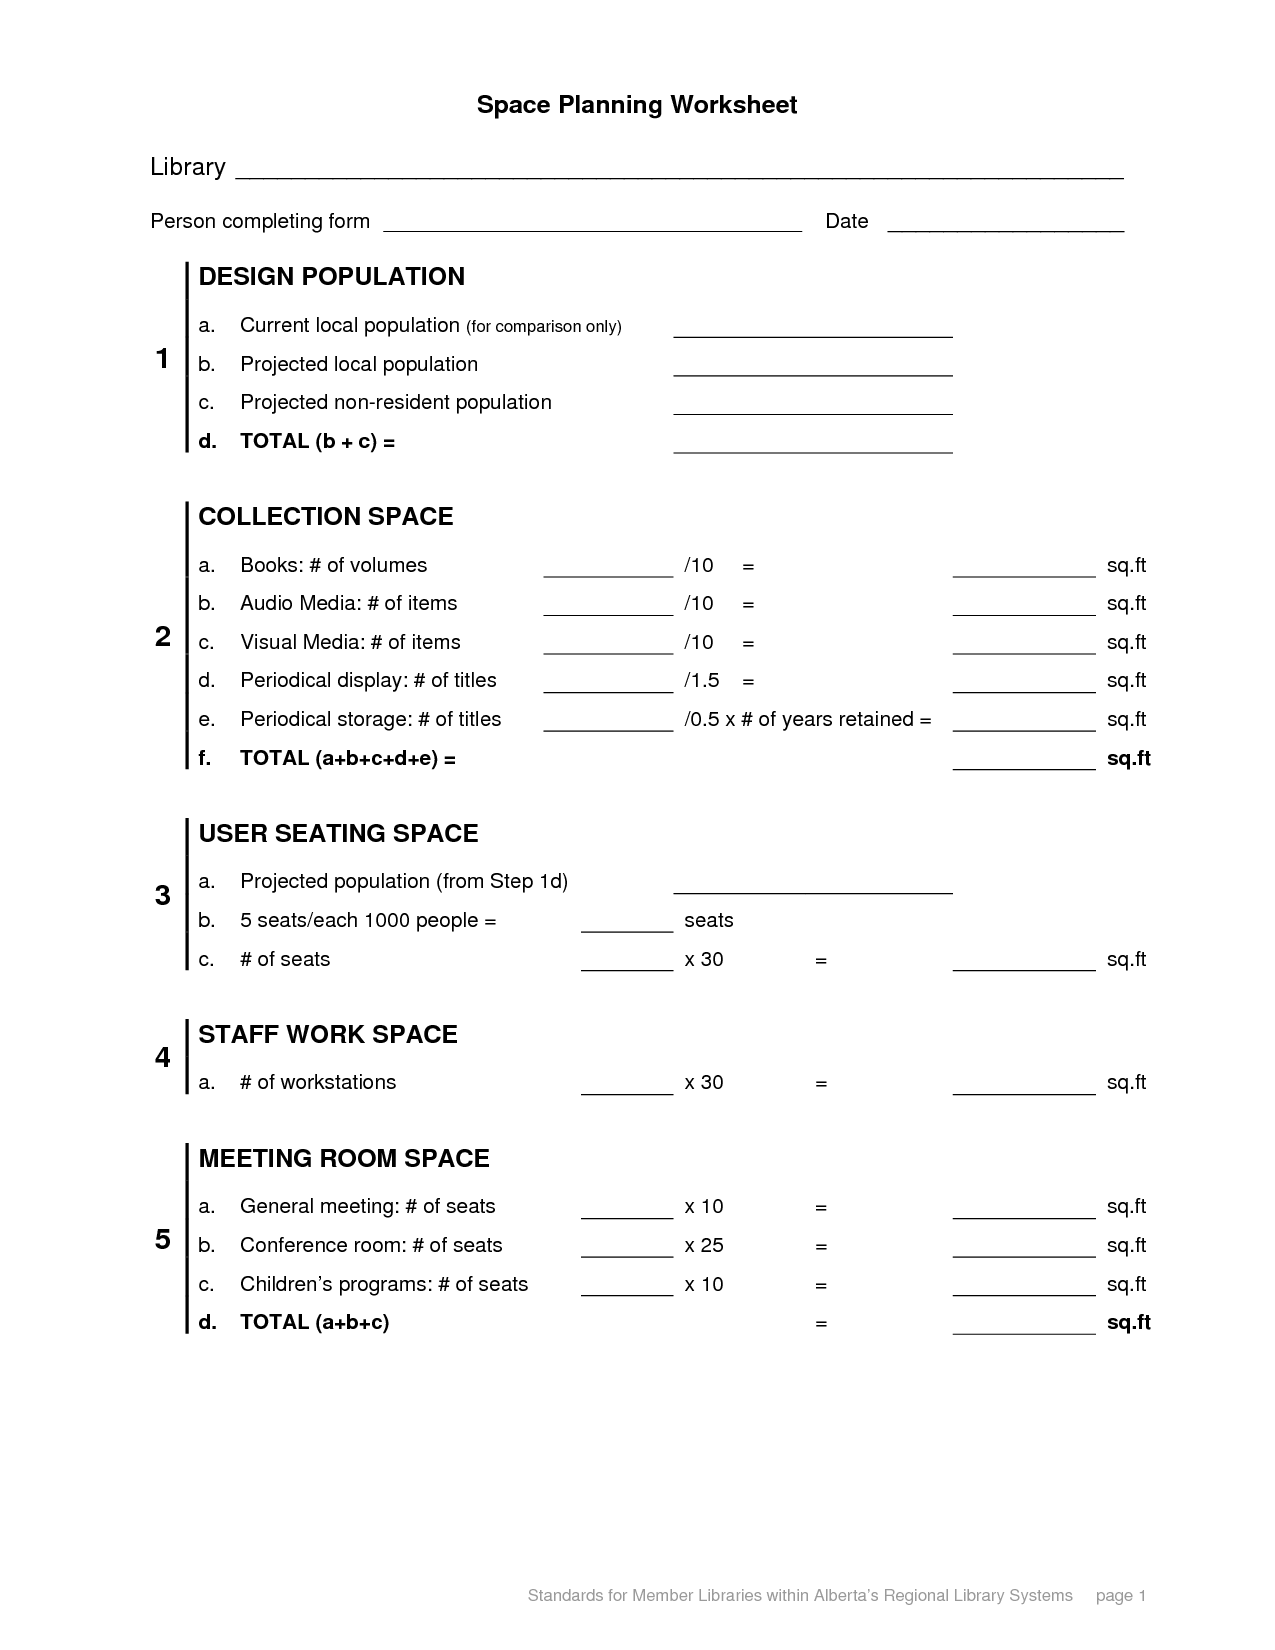 Space Planning Worksheet Image